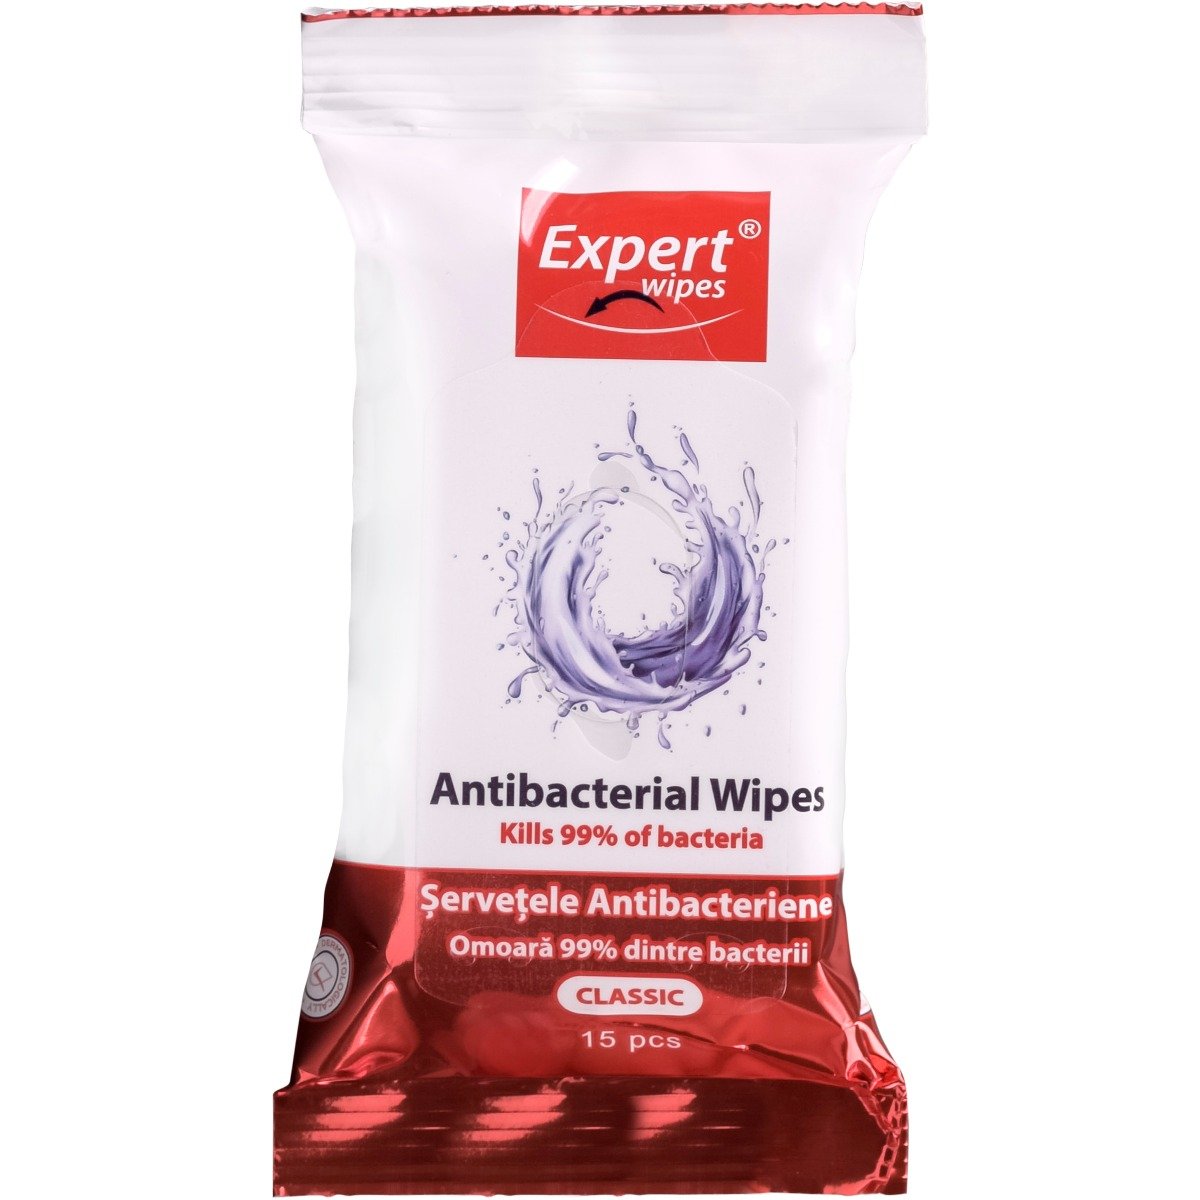 Servetele antibacteriene Expert Wipes Clasic, 15 buc Hartie igienica si servetele 2023-09-29 3